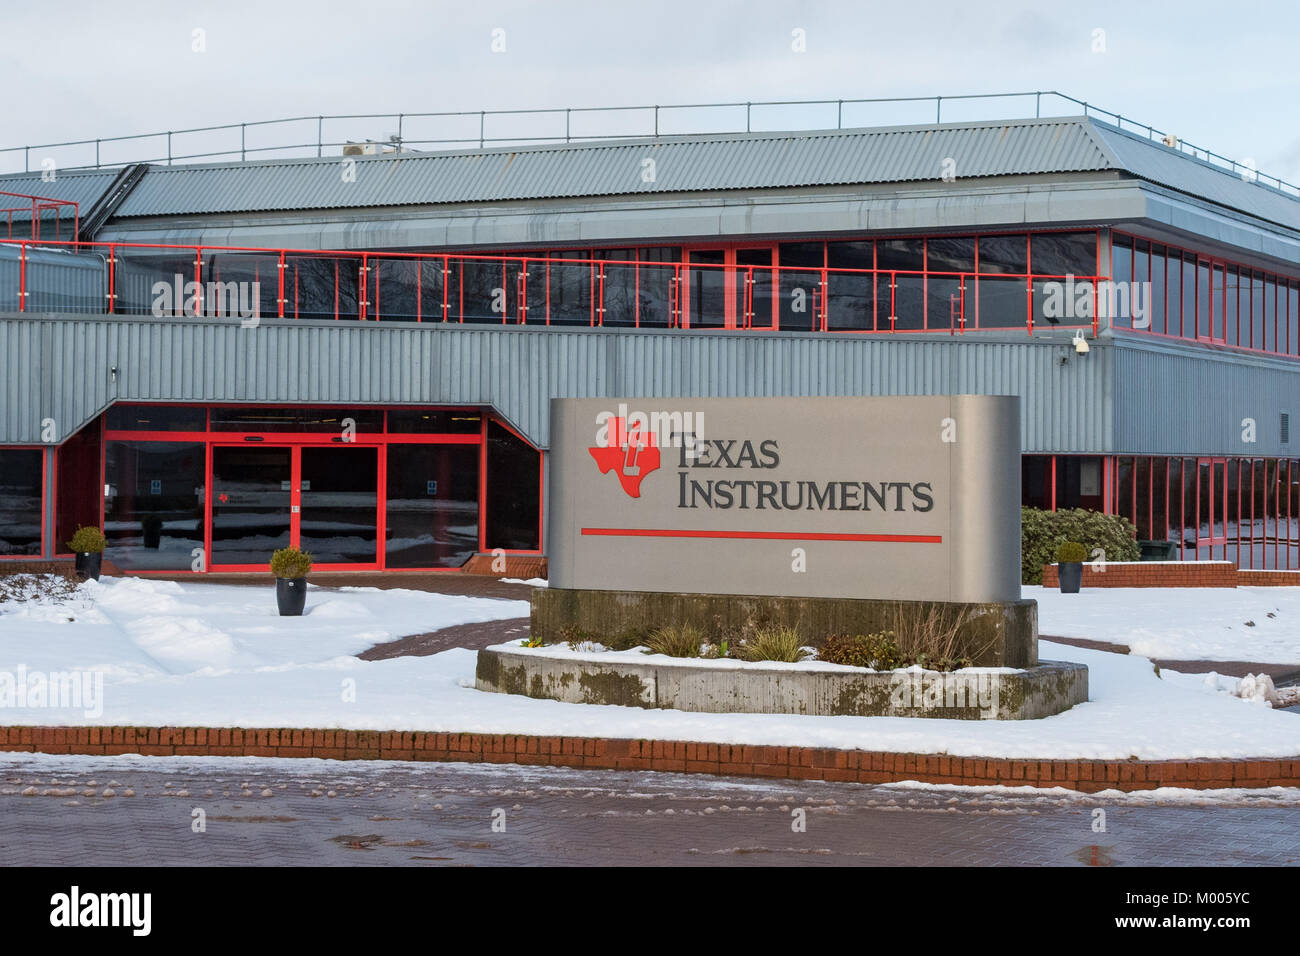 Texas Instruments Halbleiterfabrik, Gourock, Greenock, Schottland, Großbritannien Stockfoto